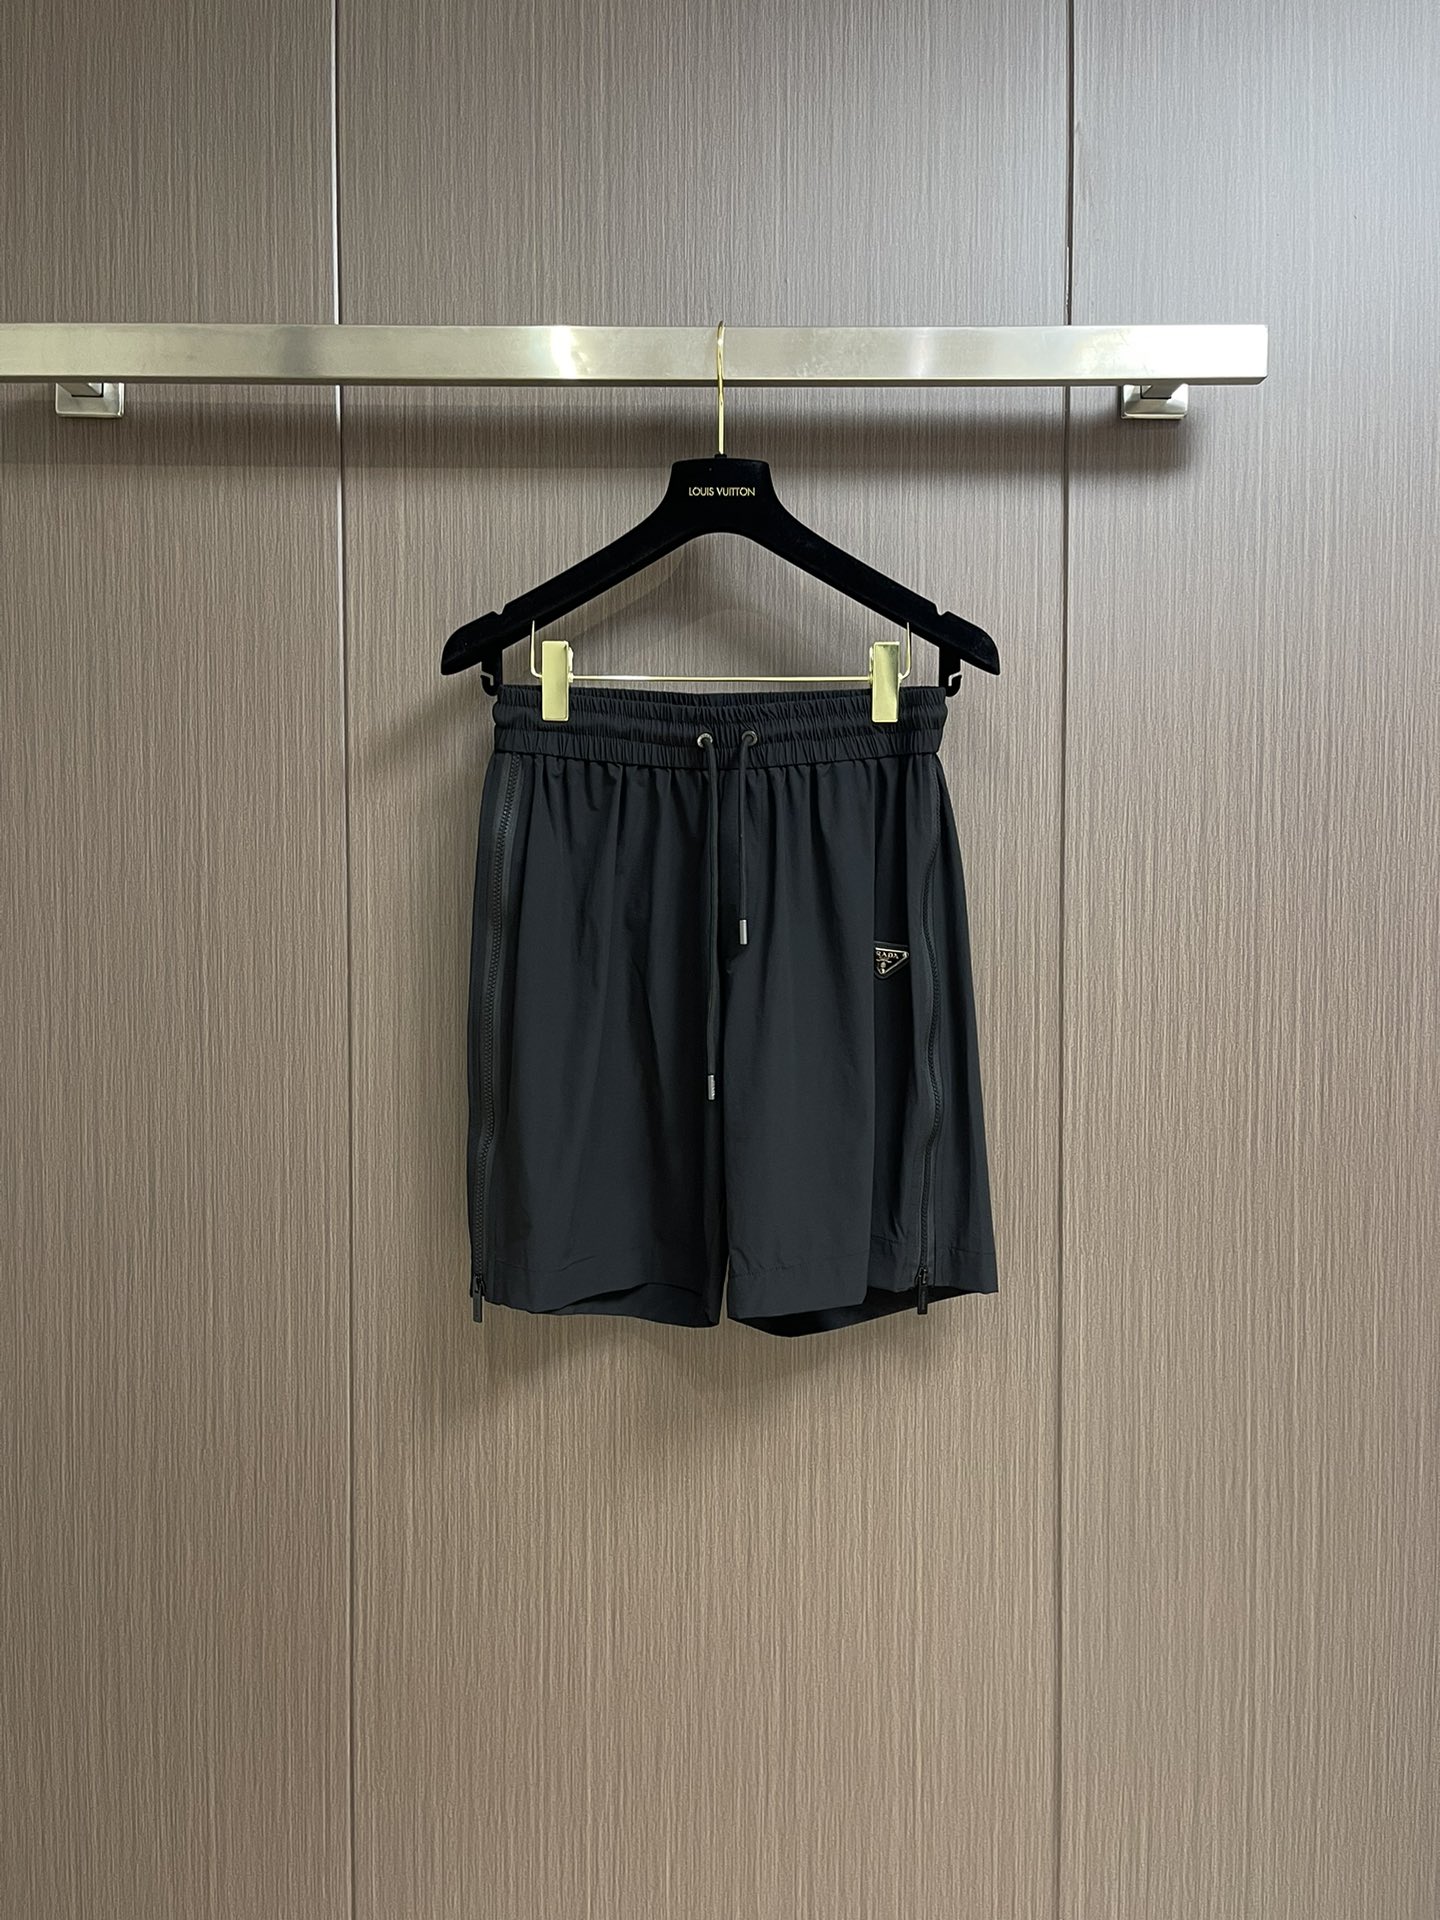 Prada Clothing Shorts Spring/Summer Collection Casual